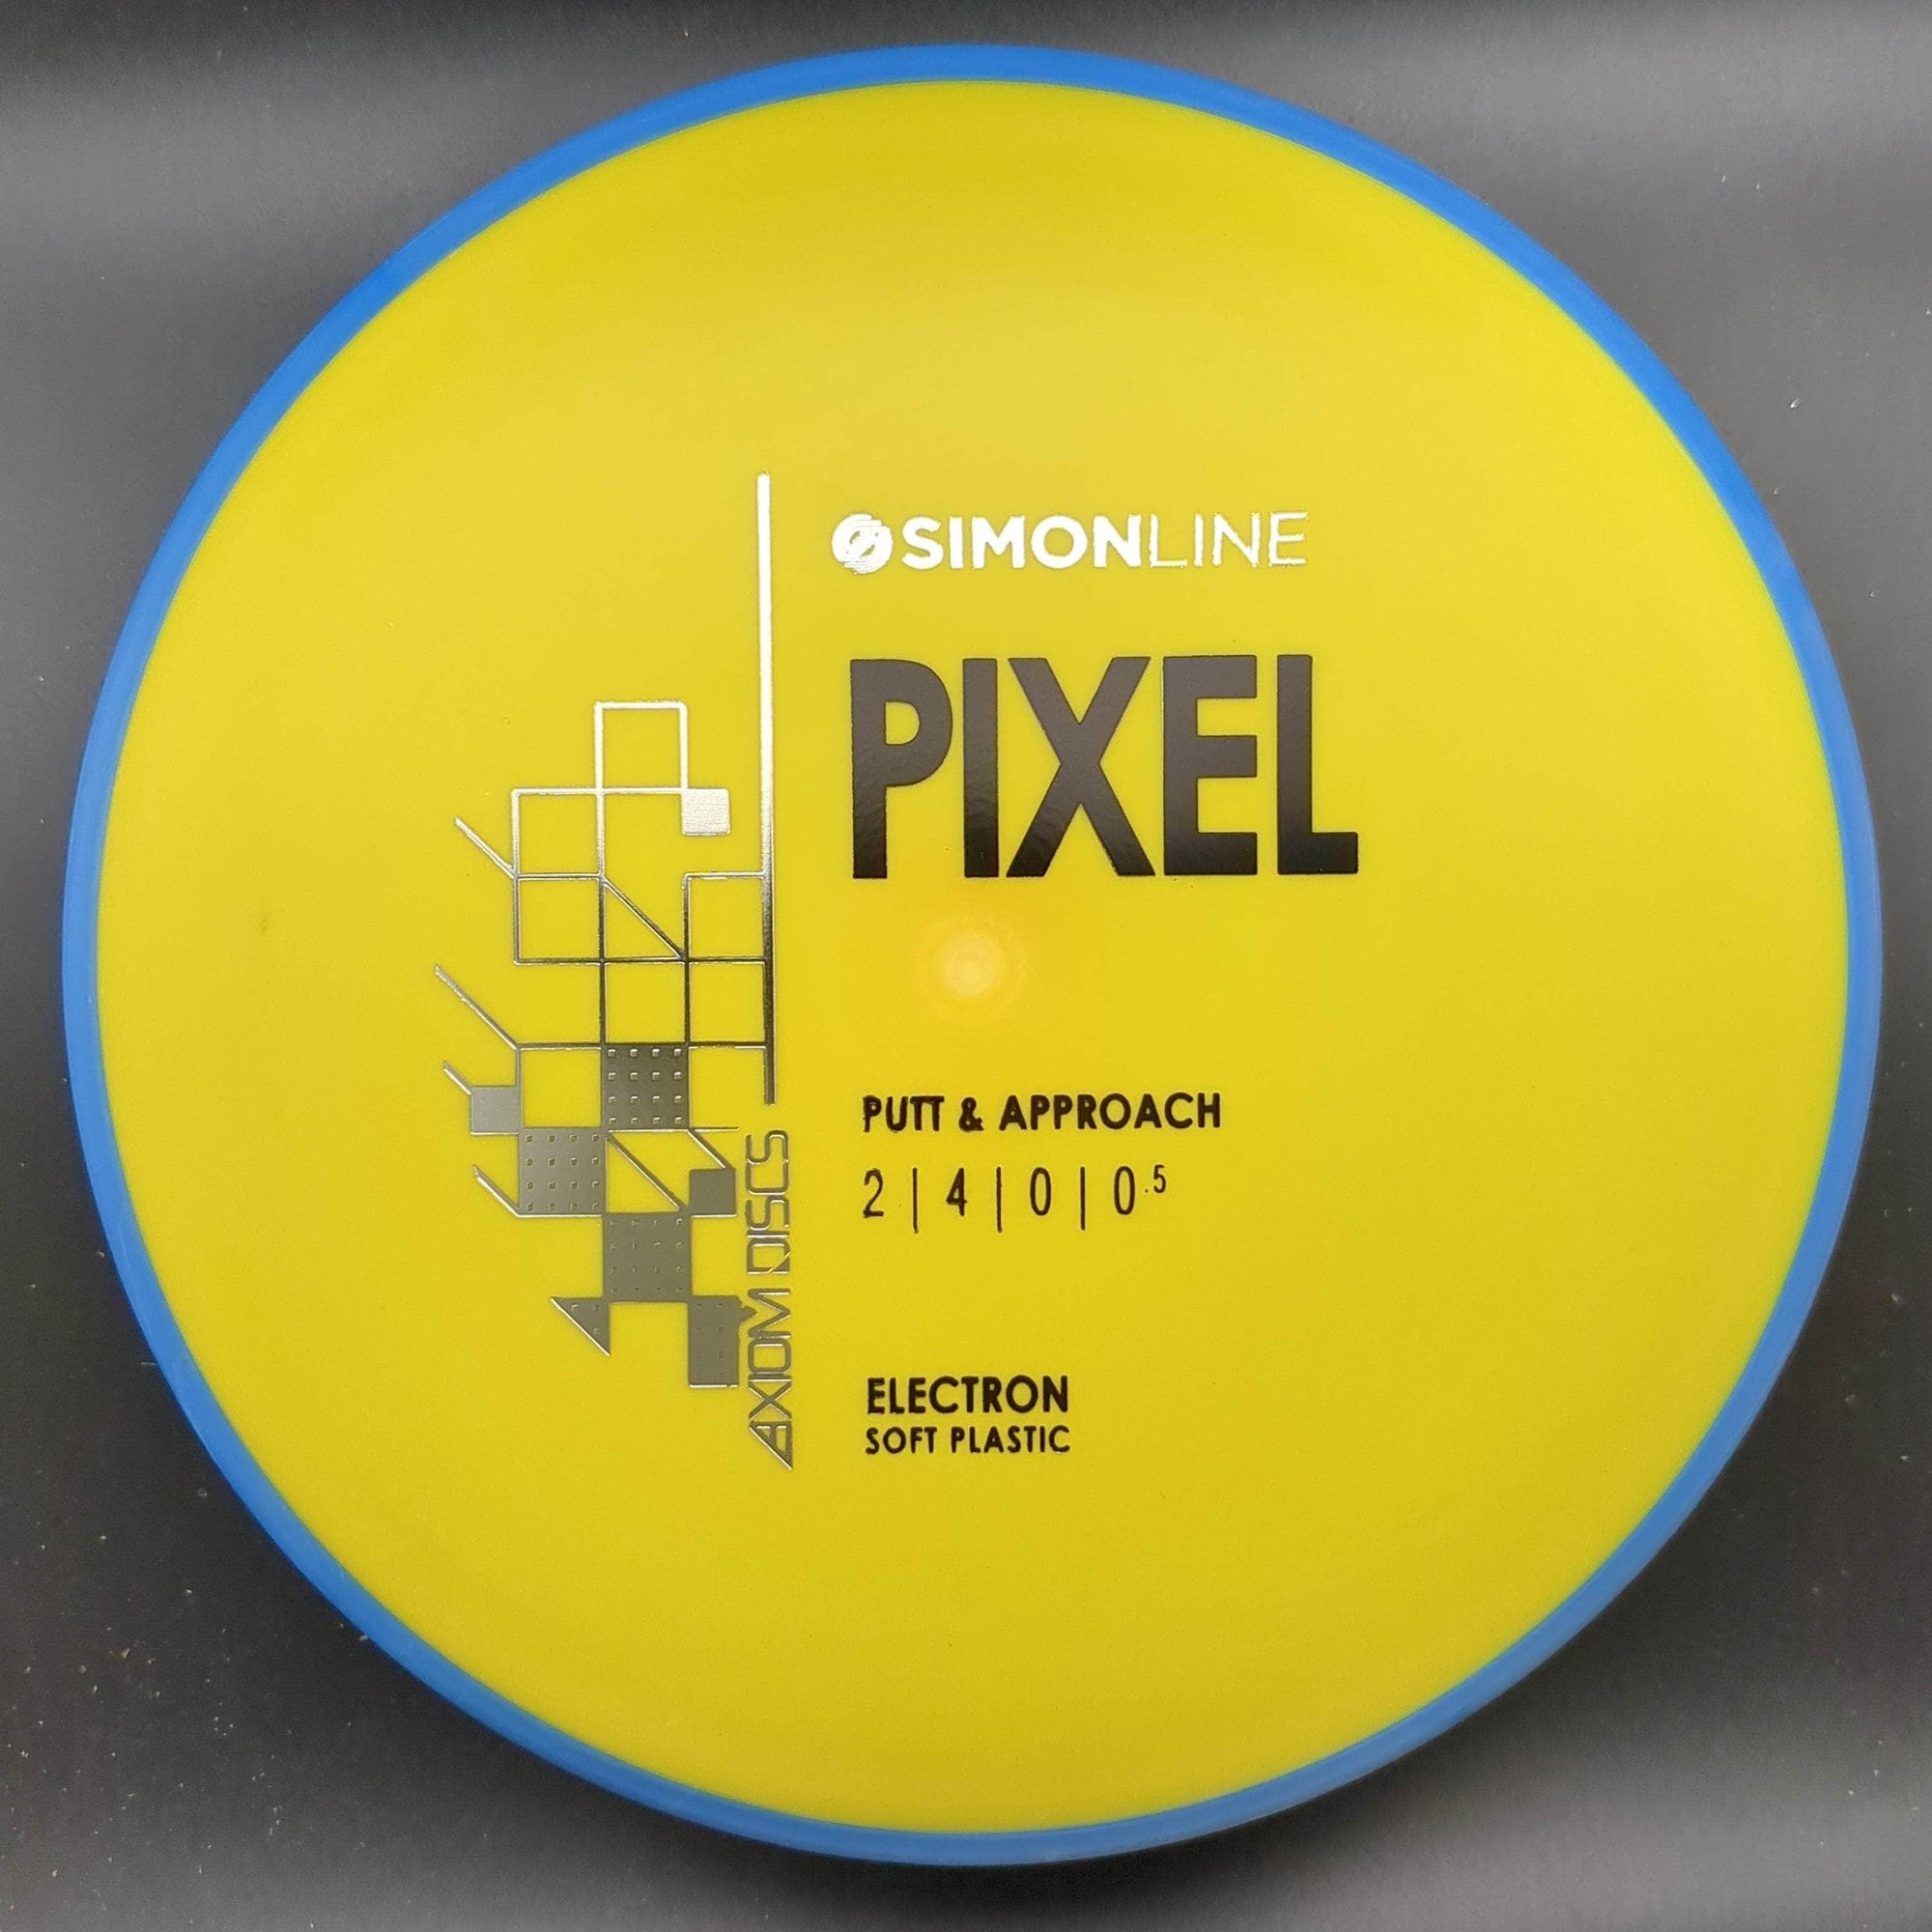 Axiom Putter Green Rim Purple Plate 173g Pixel, Electron Soft, Simon Line